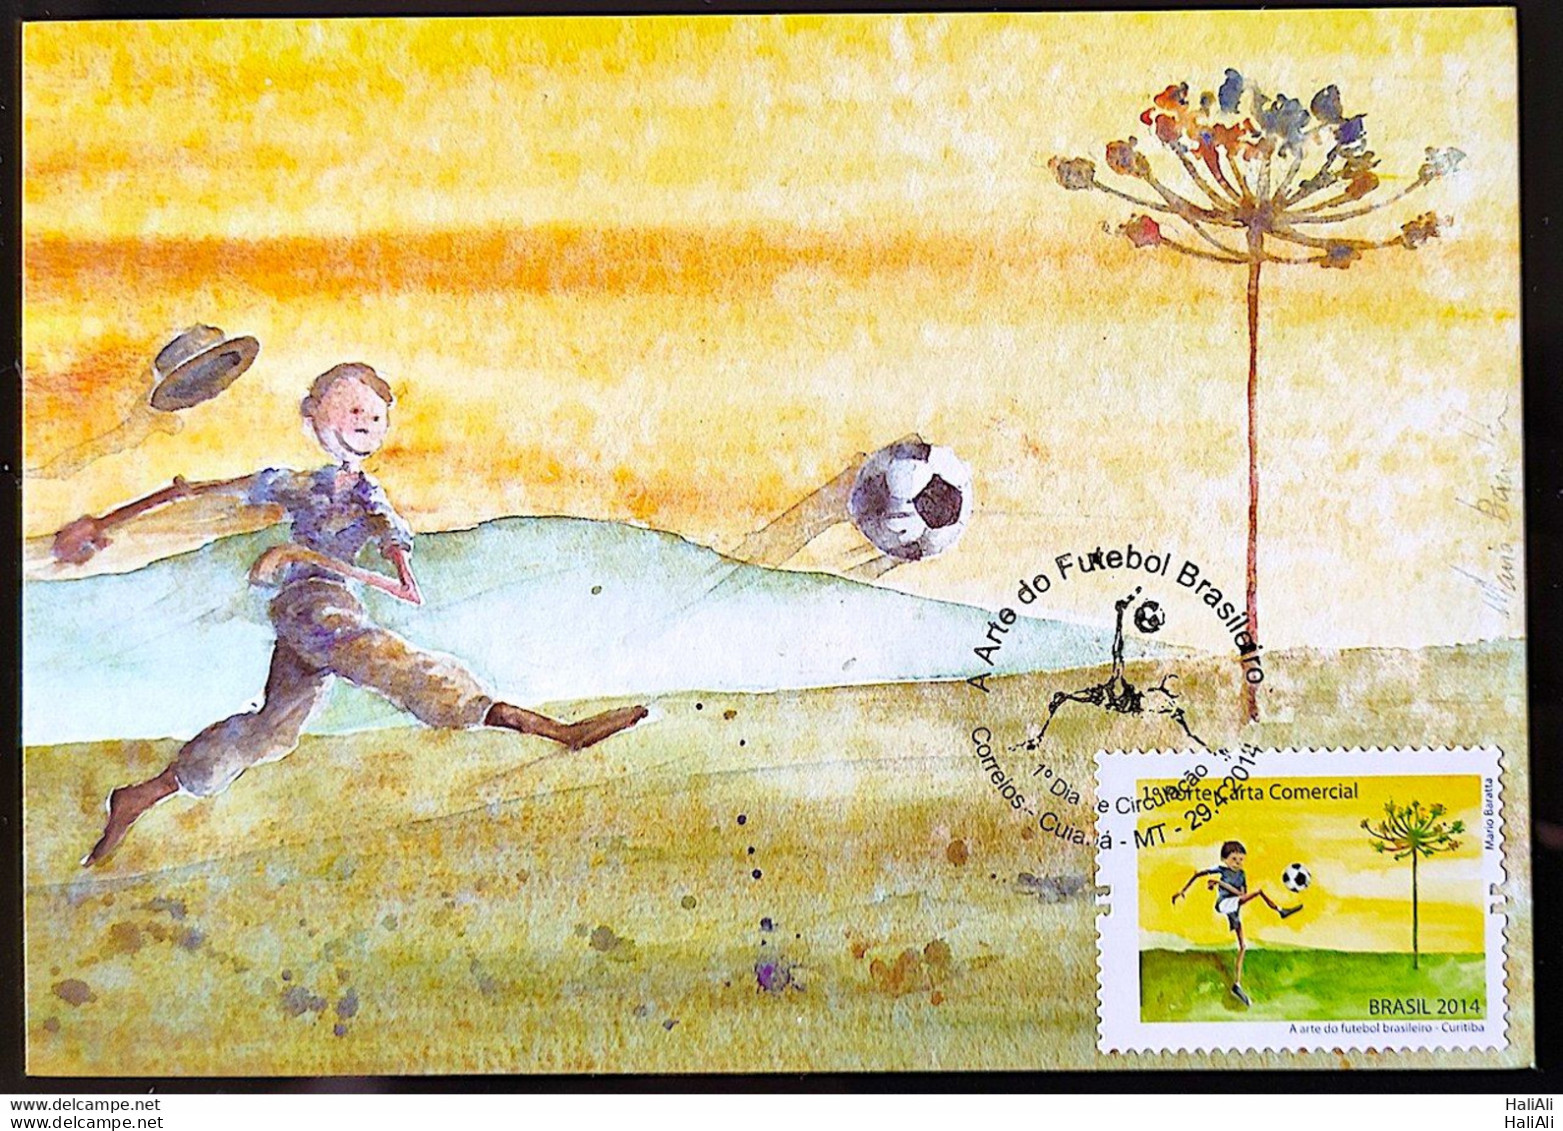 Brazil Maximo Postcard 290A World Cup Art of Footaball CBC MT